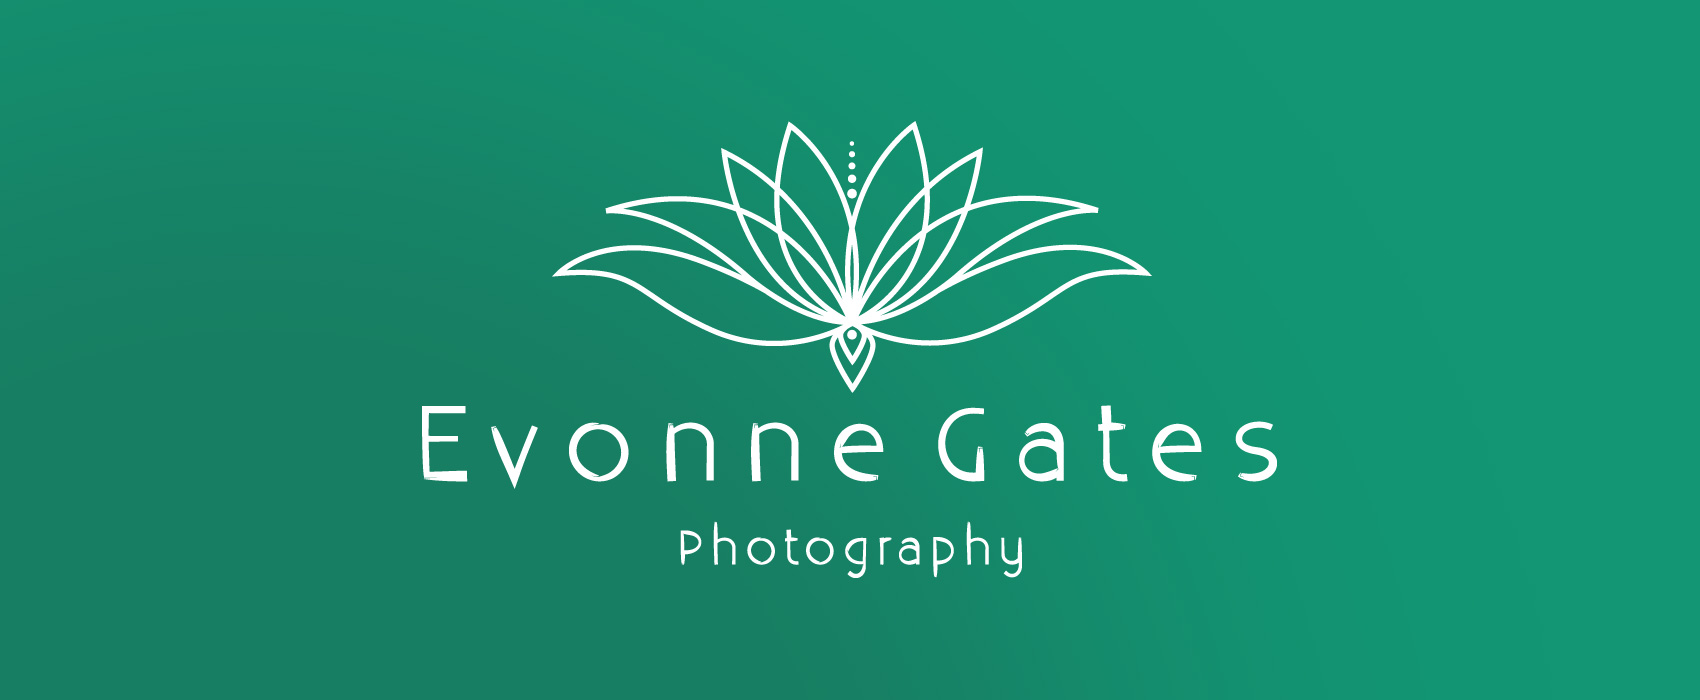 Evonne gates Photography Logo Design